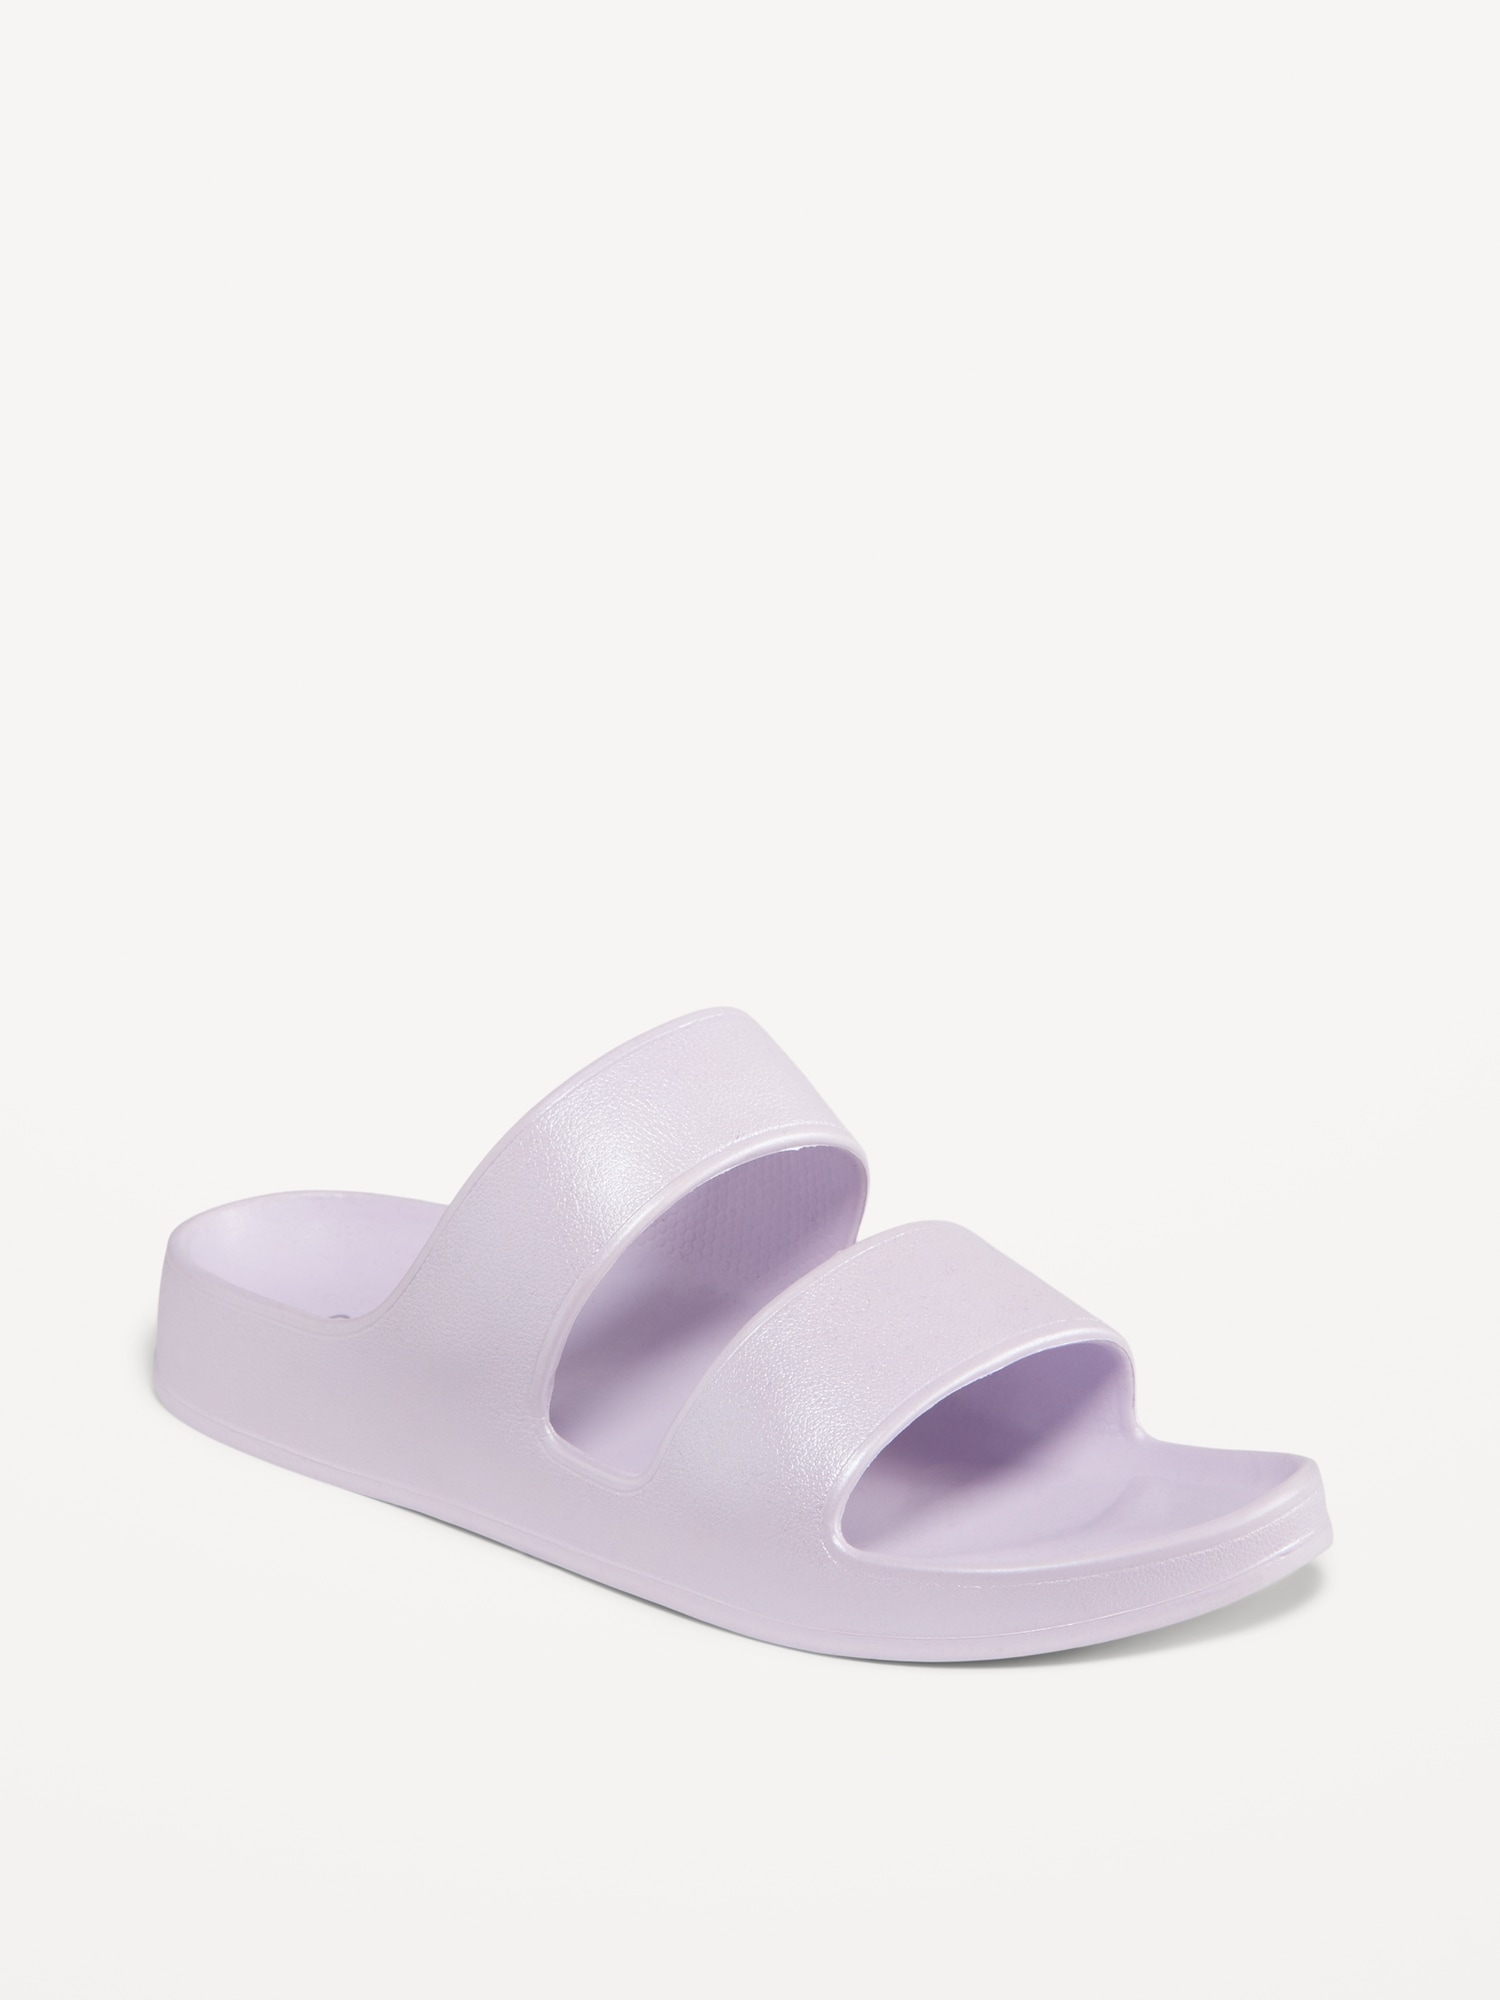 Double-Strap Slide Sandals for Girls